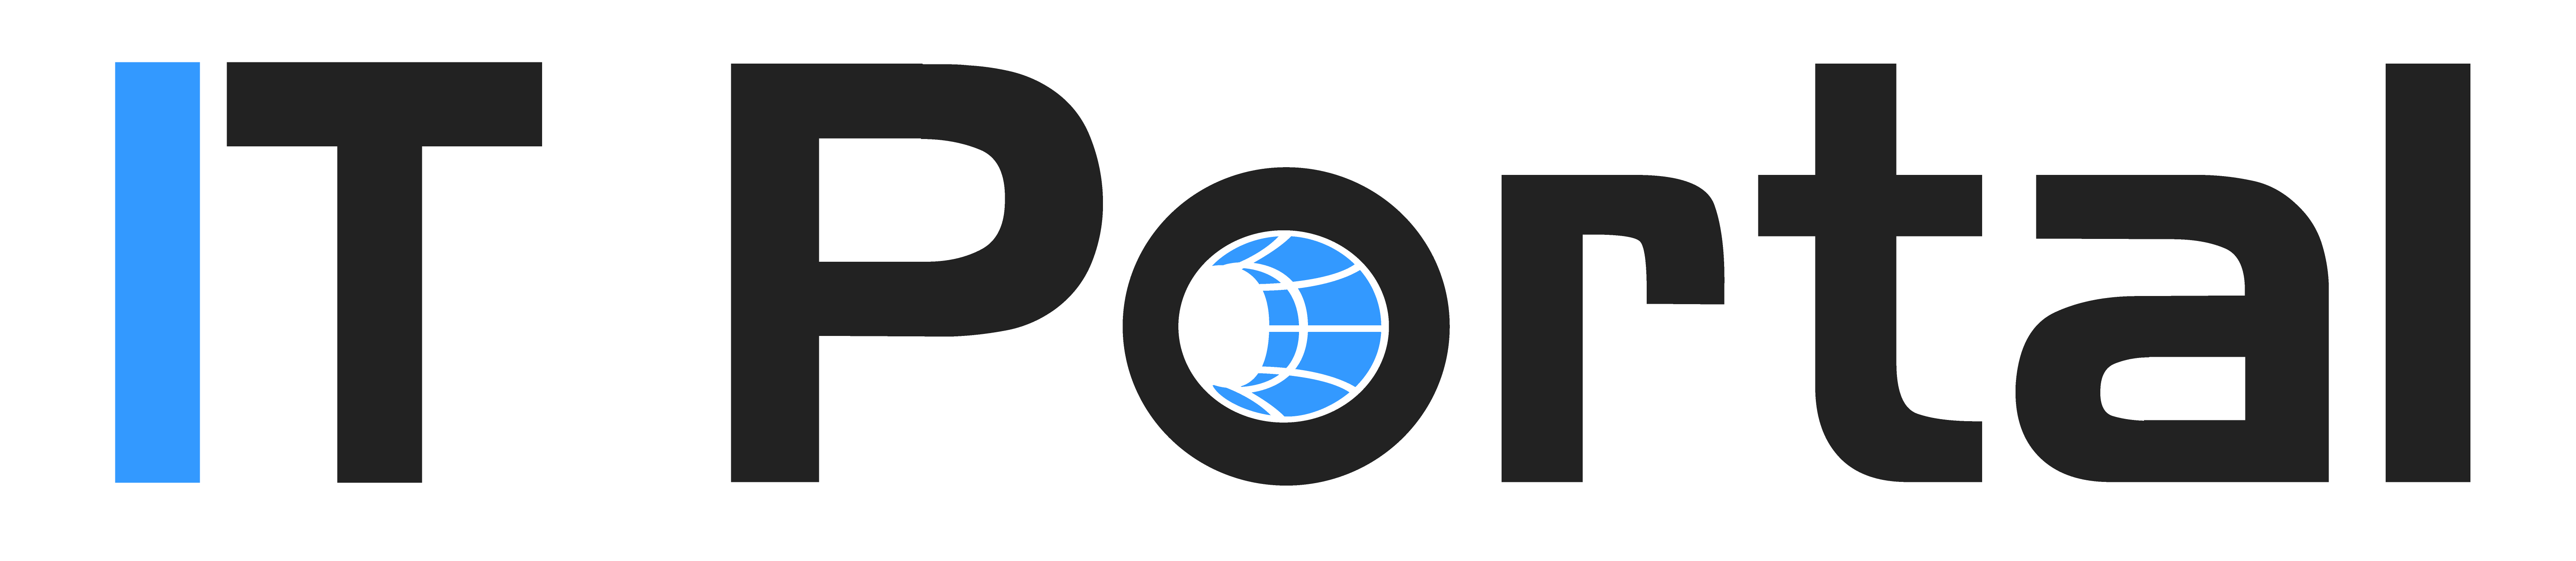 IT Portal